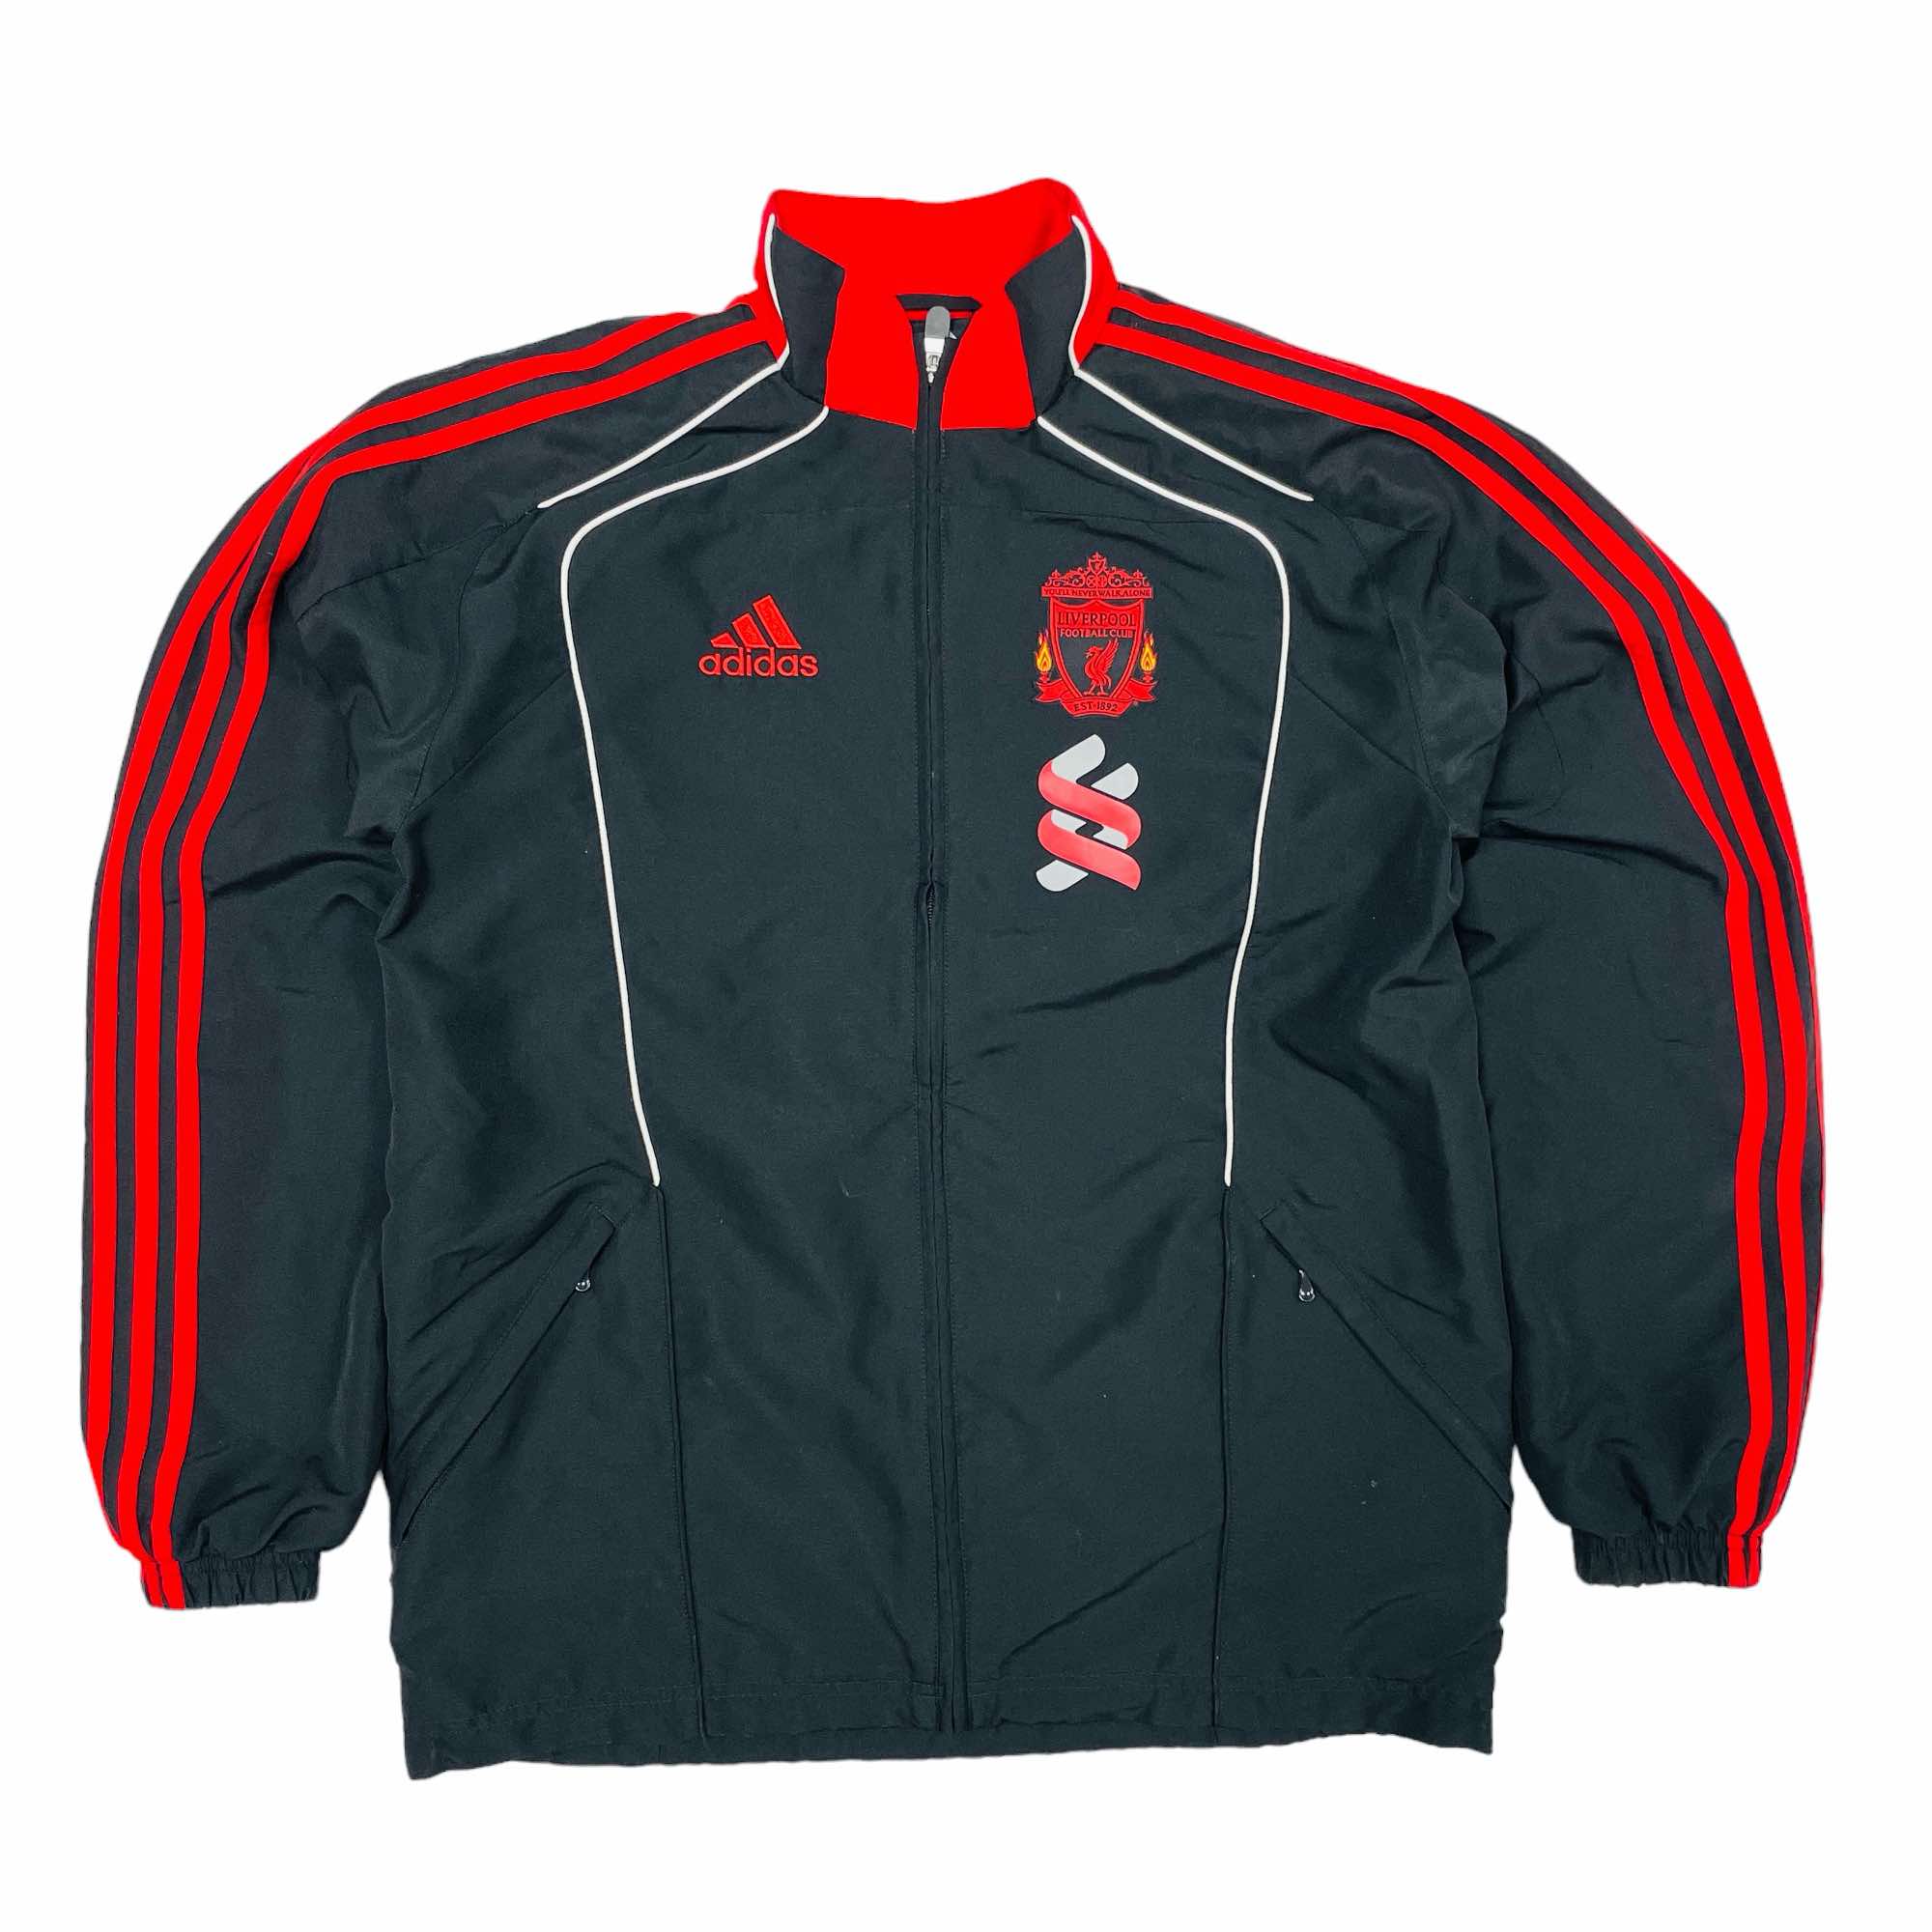 Liverpool 2010/11 Adidas Training Jacket - Medium